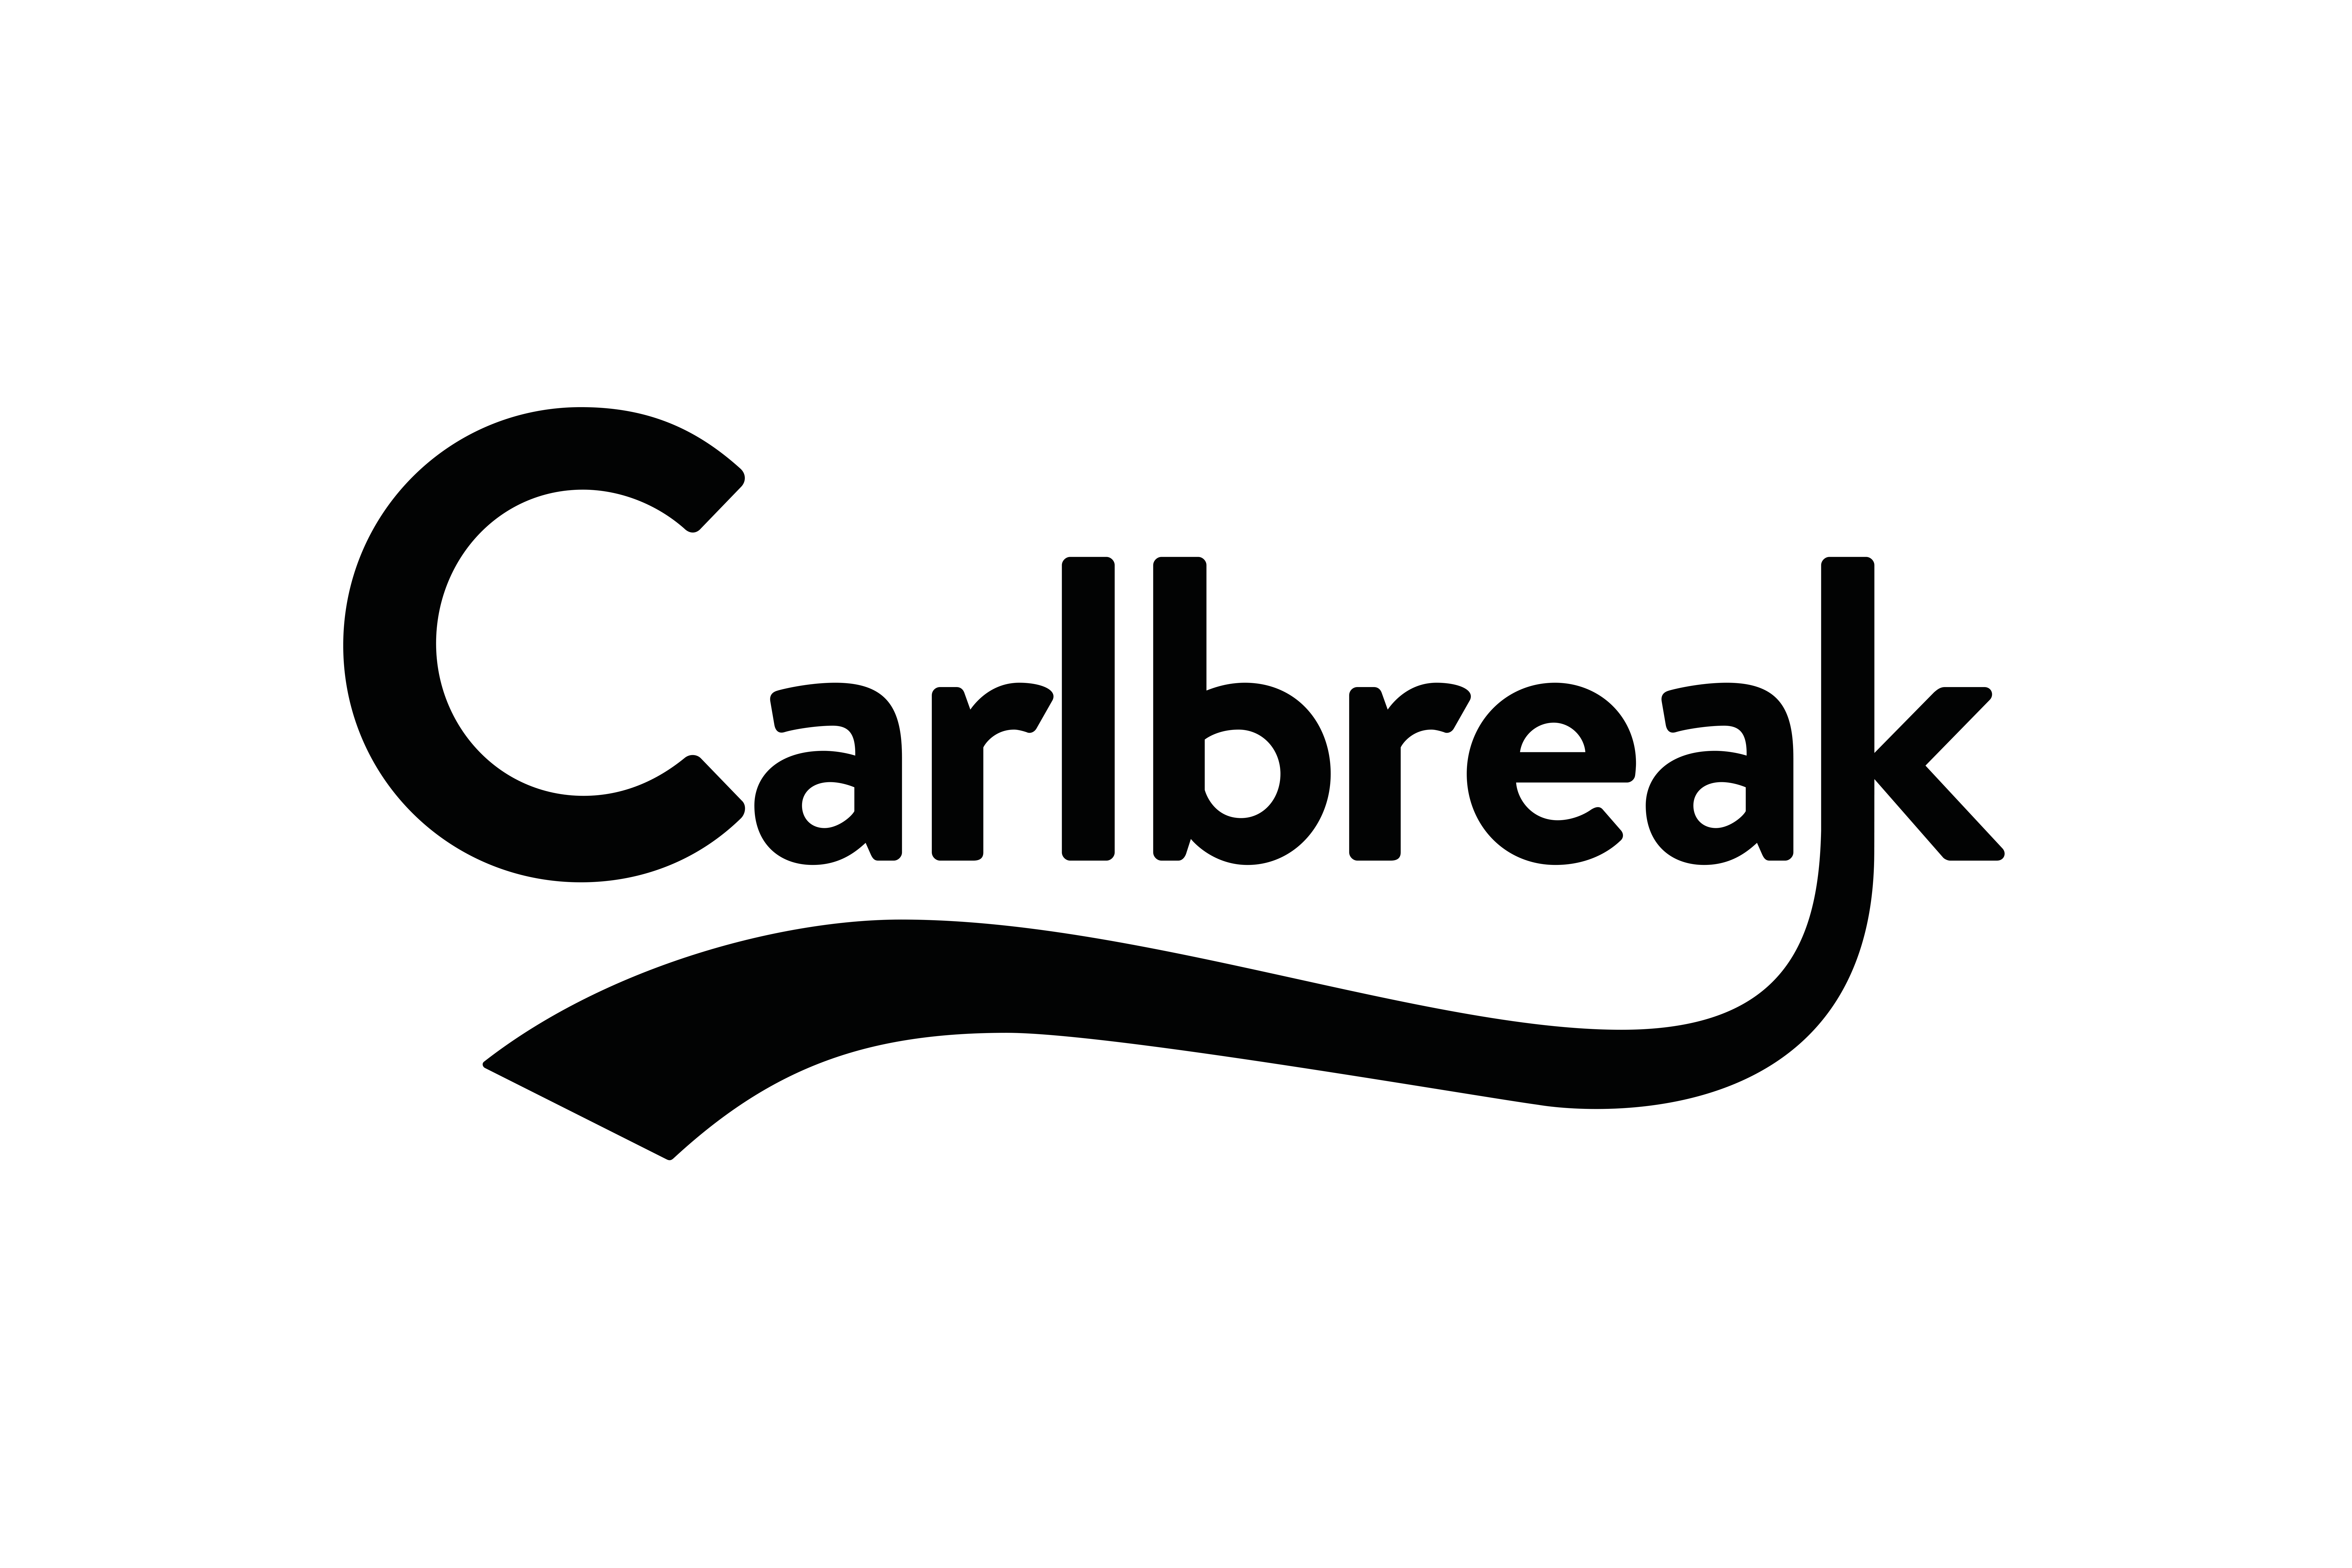 Carlbreak